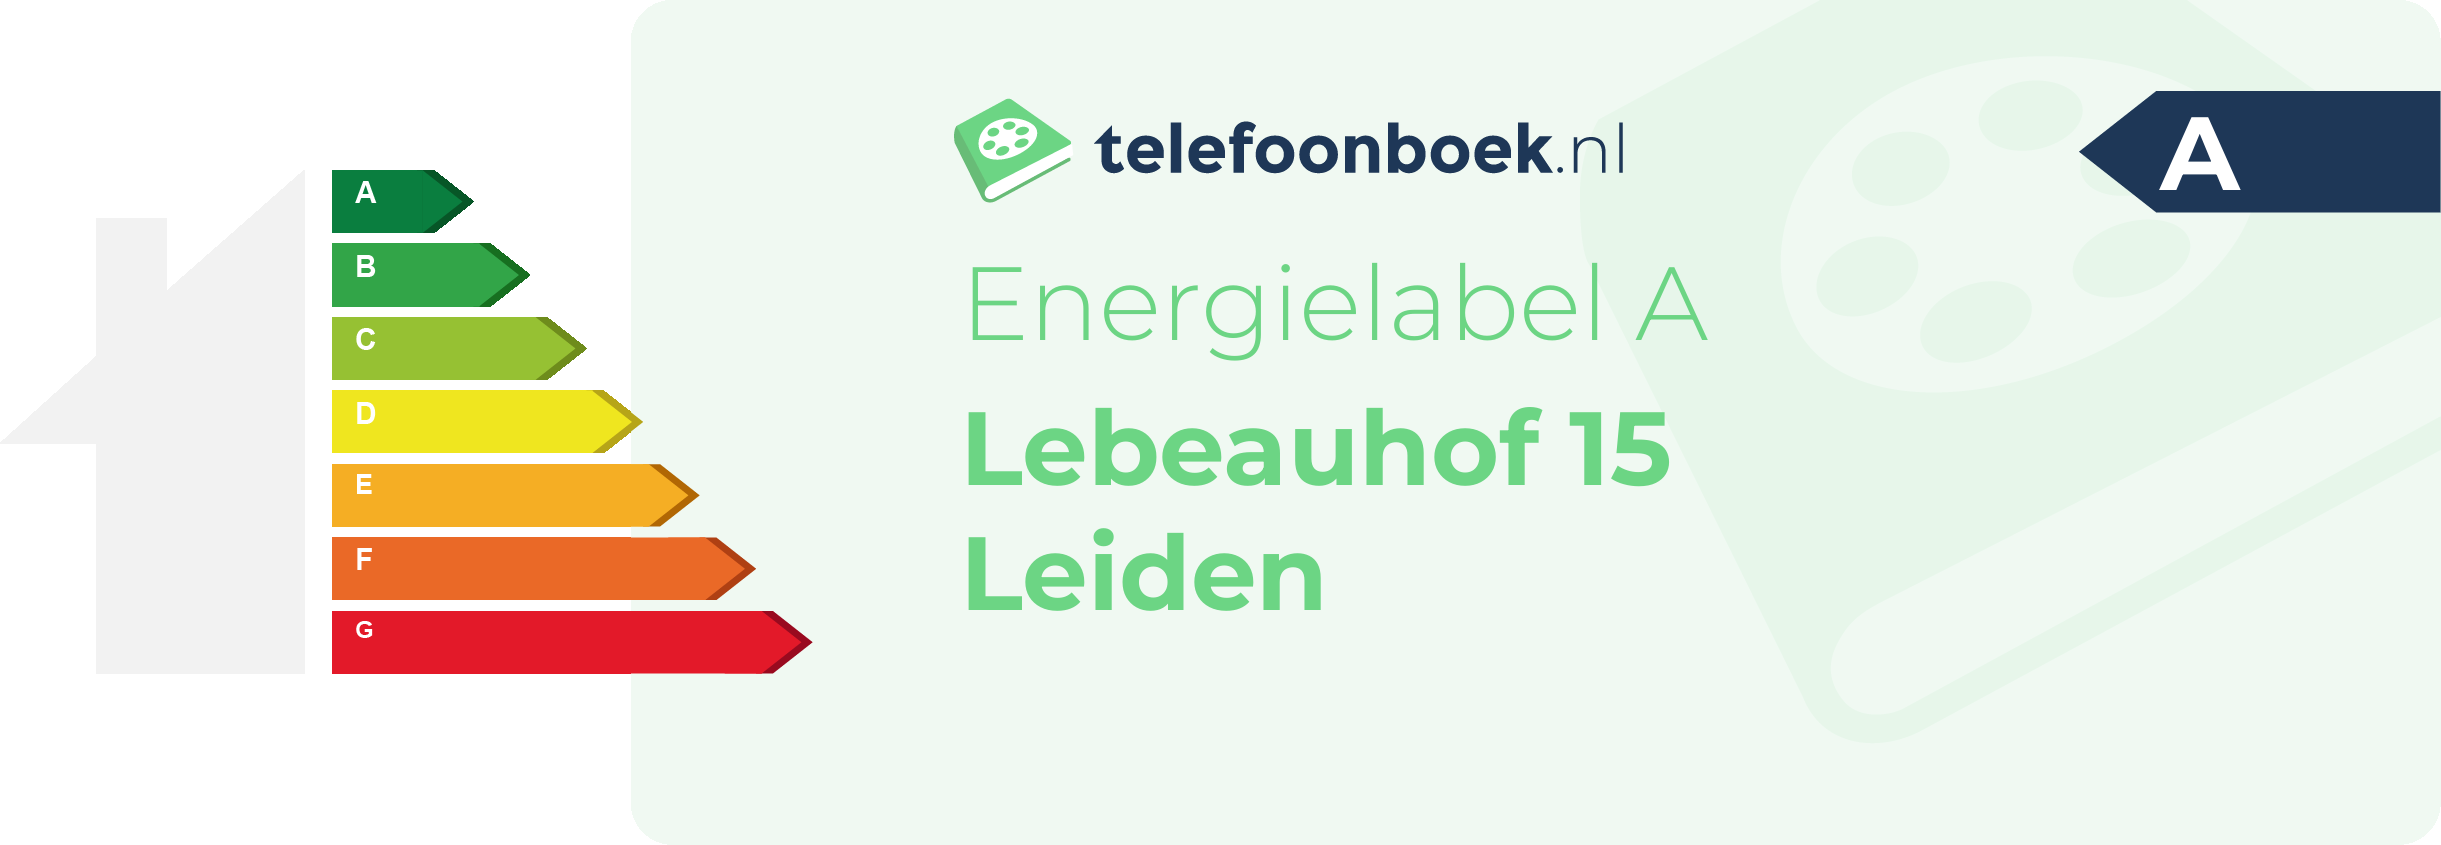 Energielabel Lebeauhof 15 Leiden